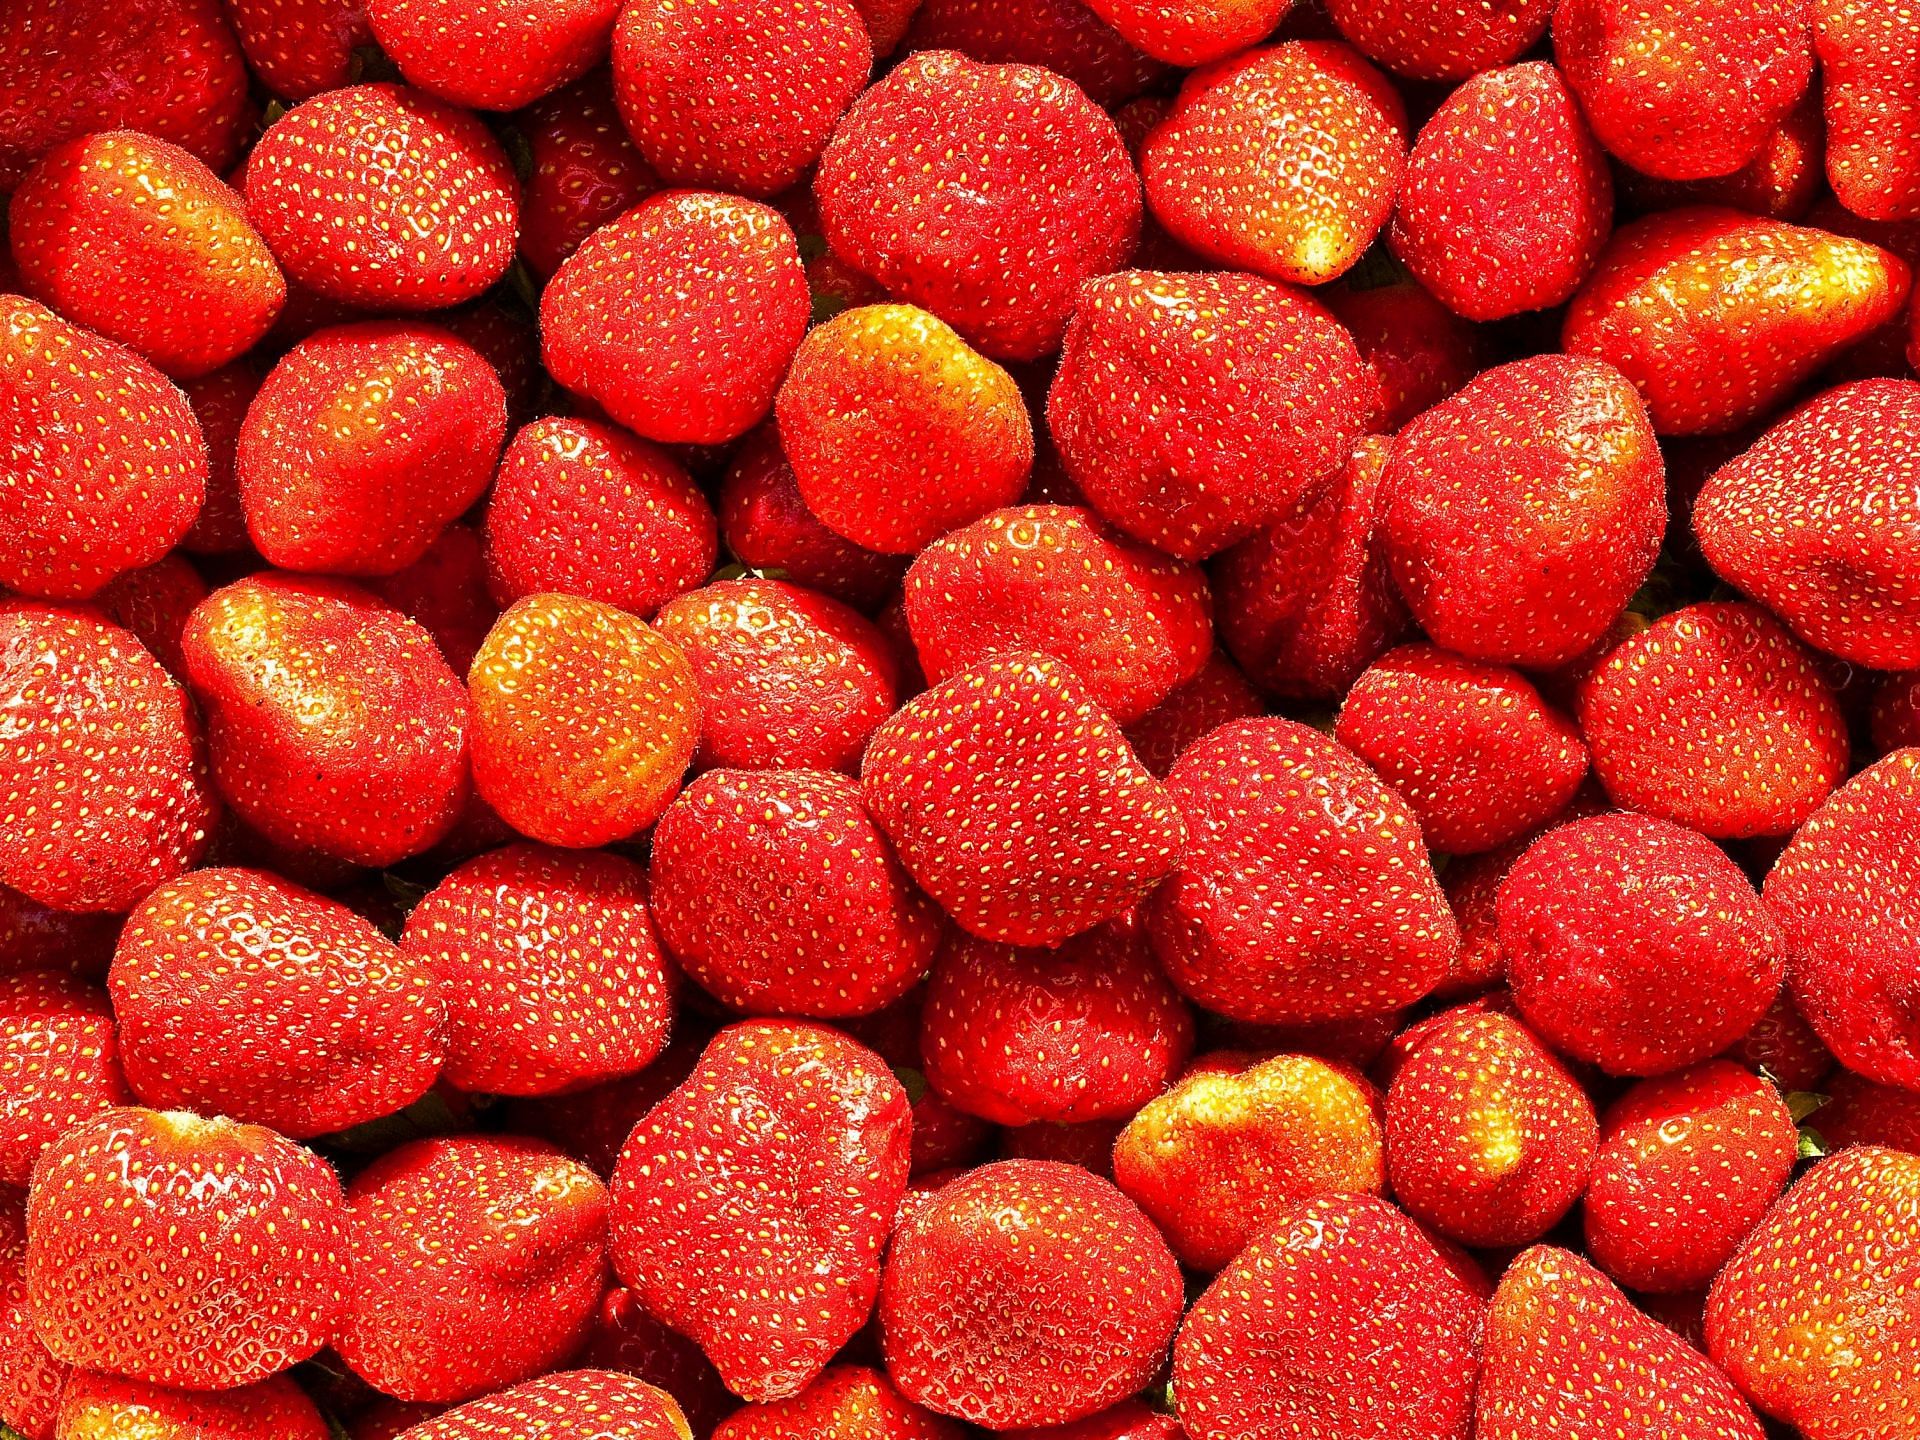 Crushed strawberries to reduce dark spots on the lips (Image by Honza Vojtek/Unsplash)